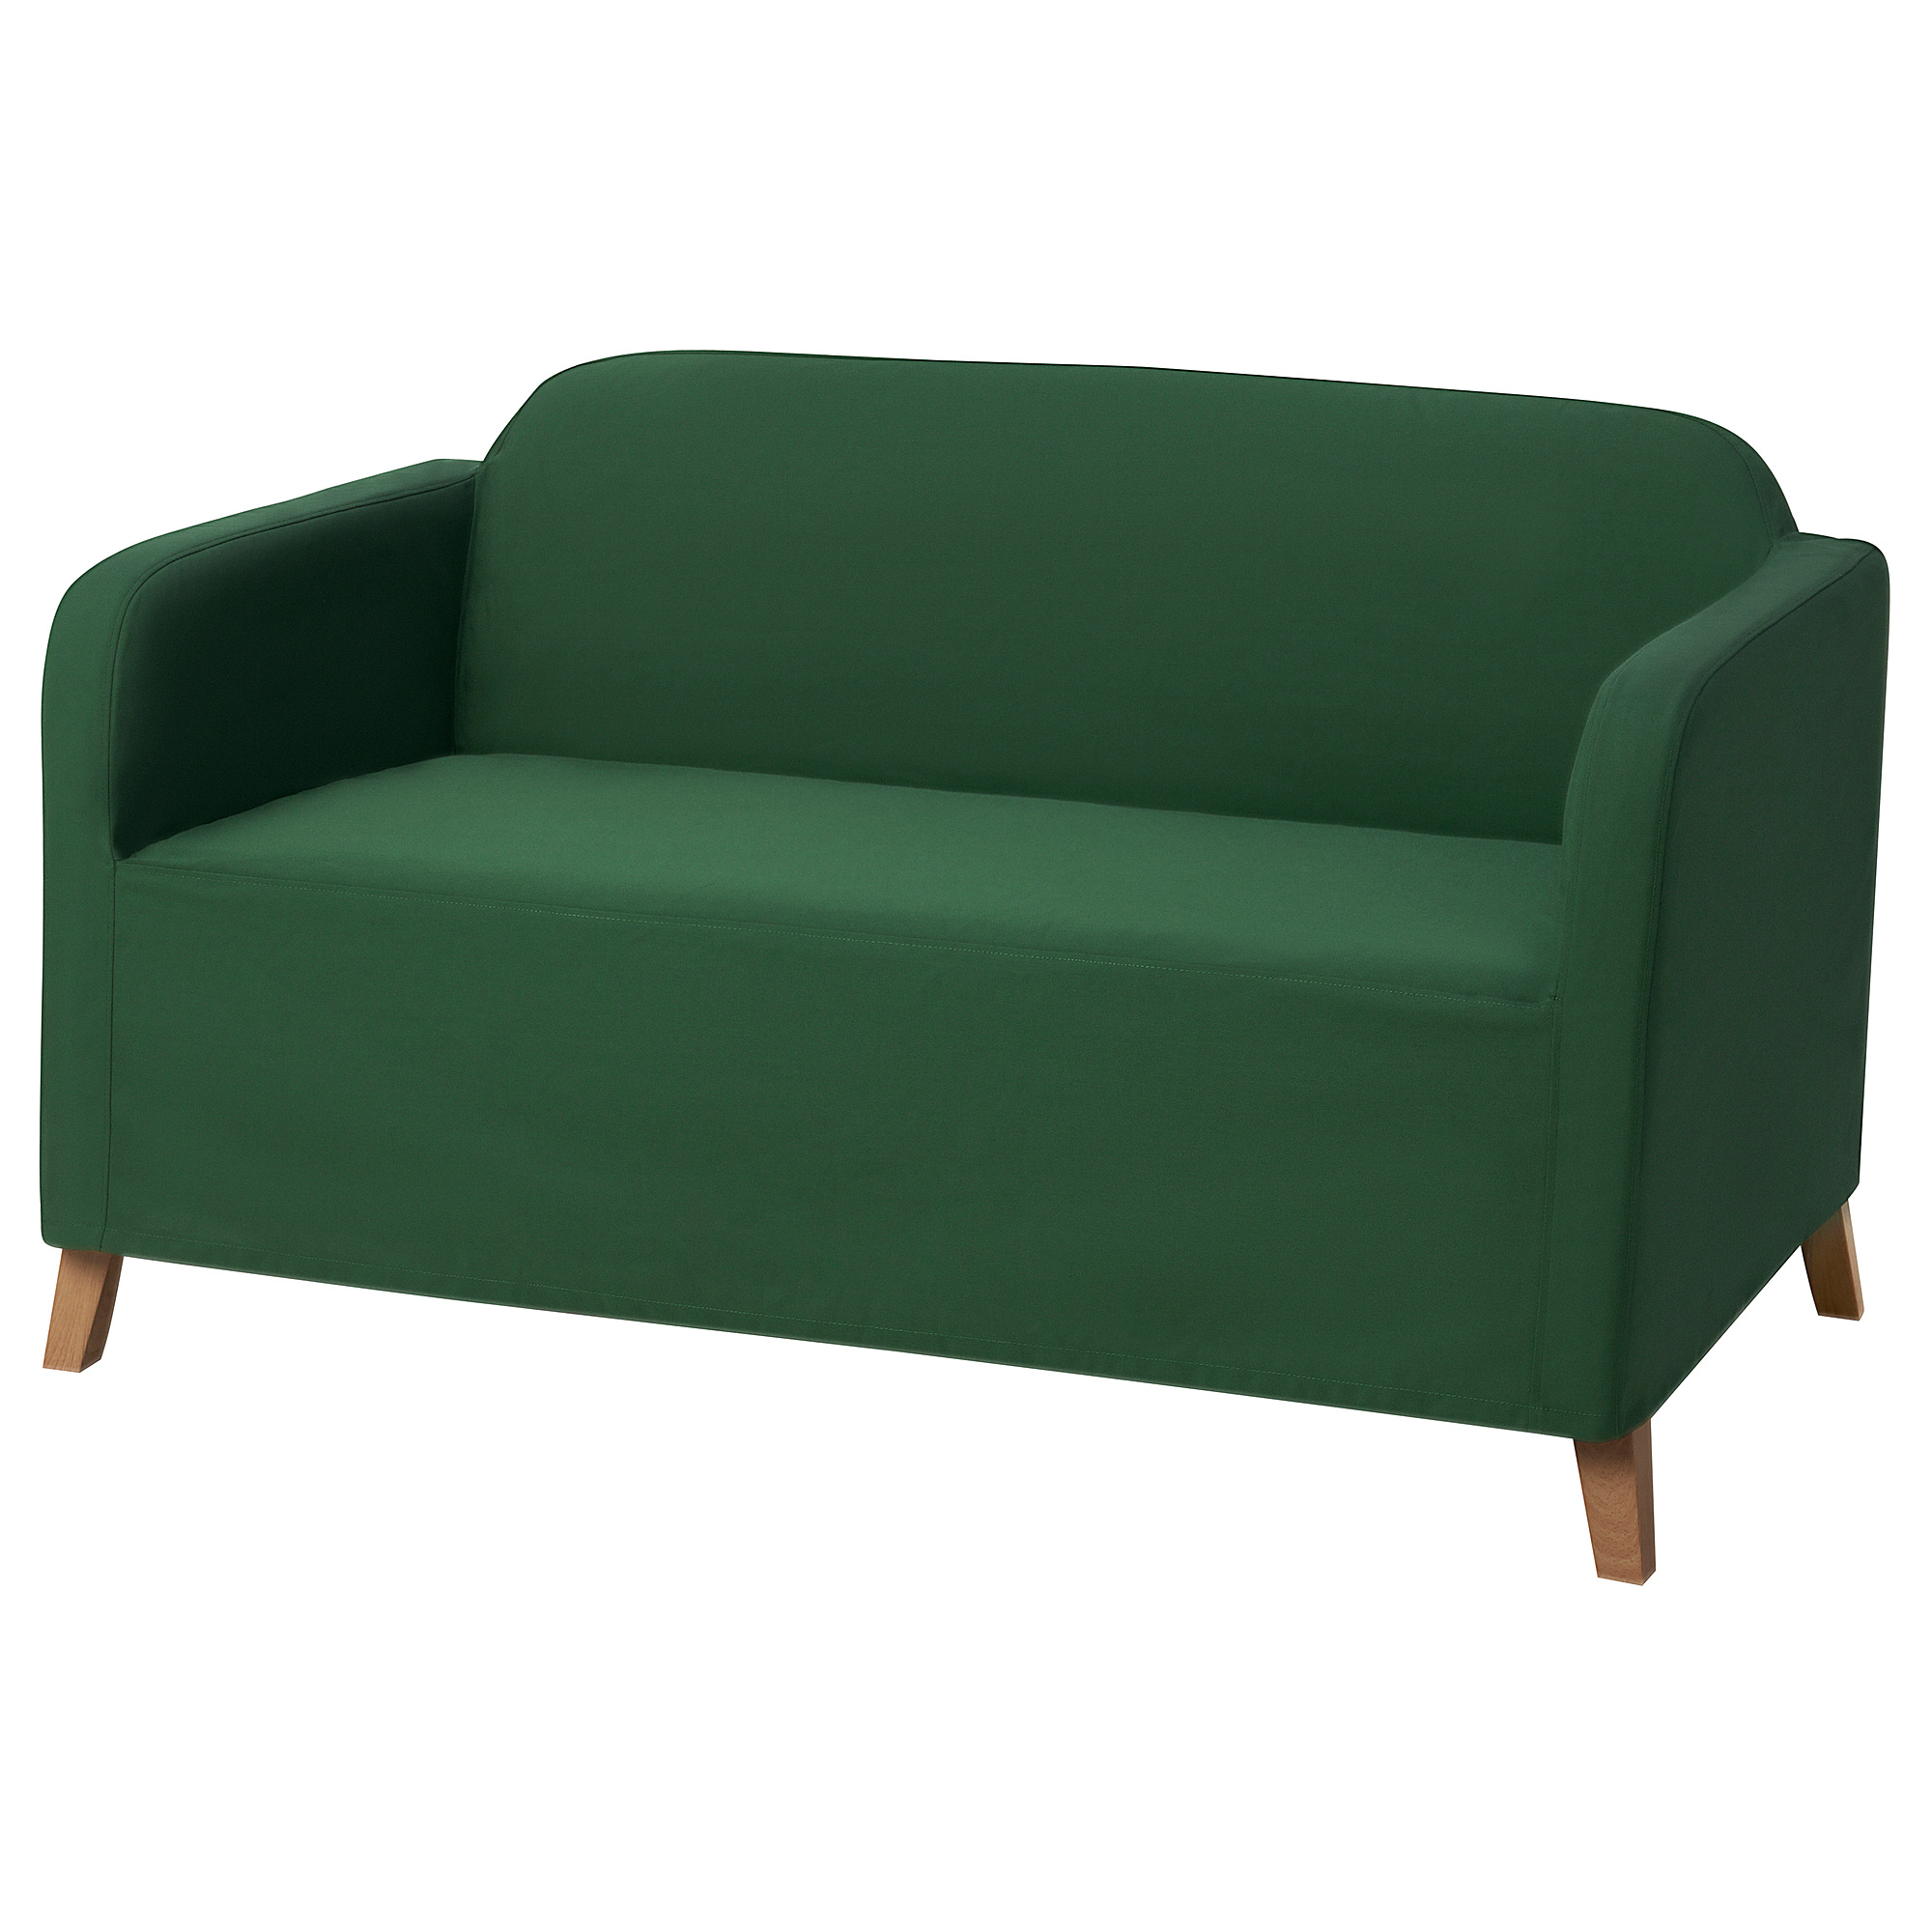 LINANÄS sofa protector for 2-seat sofa